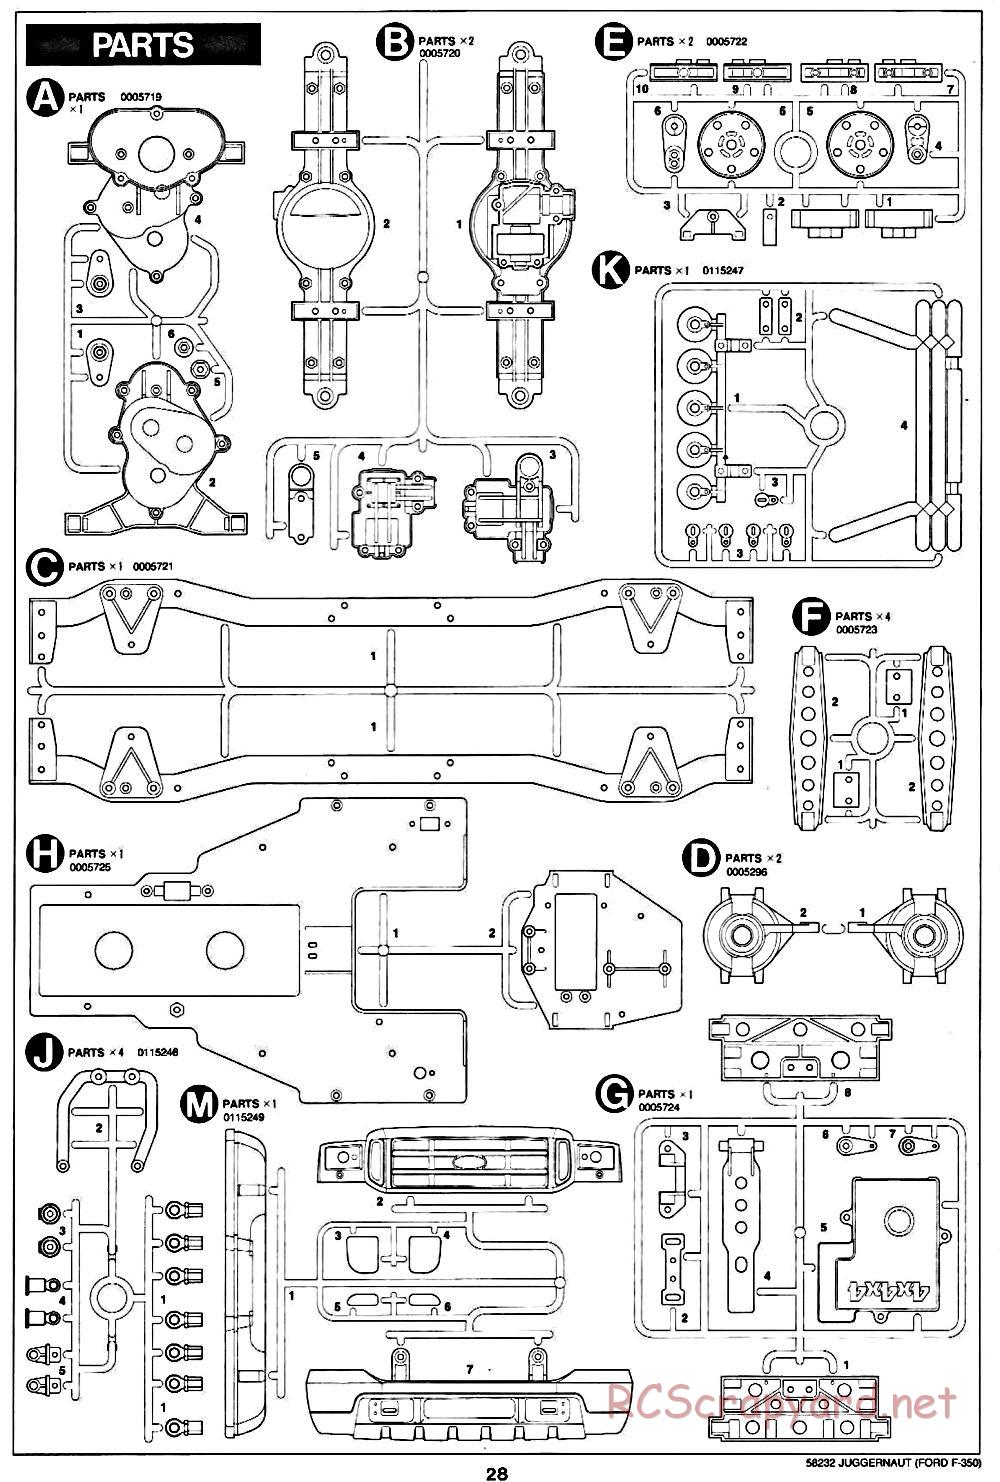 Tamiya - Juggernaut Chassis - Manual - Page 28